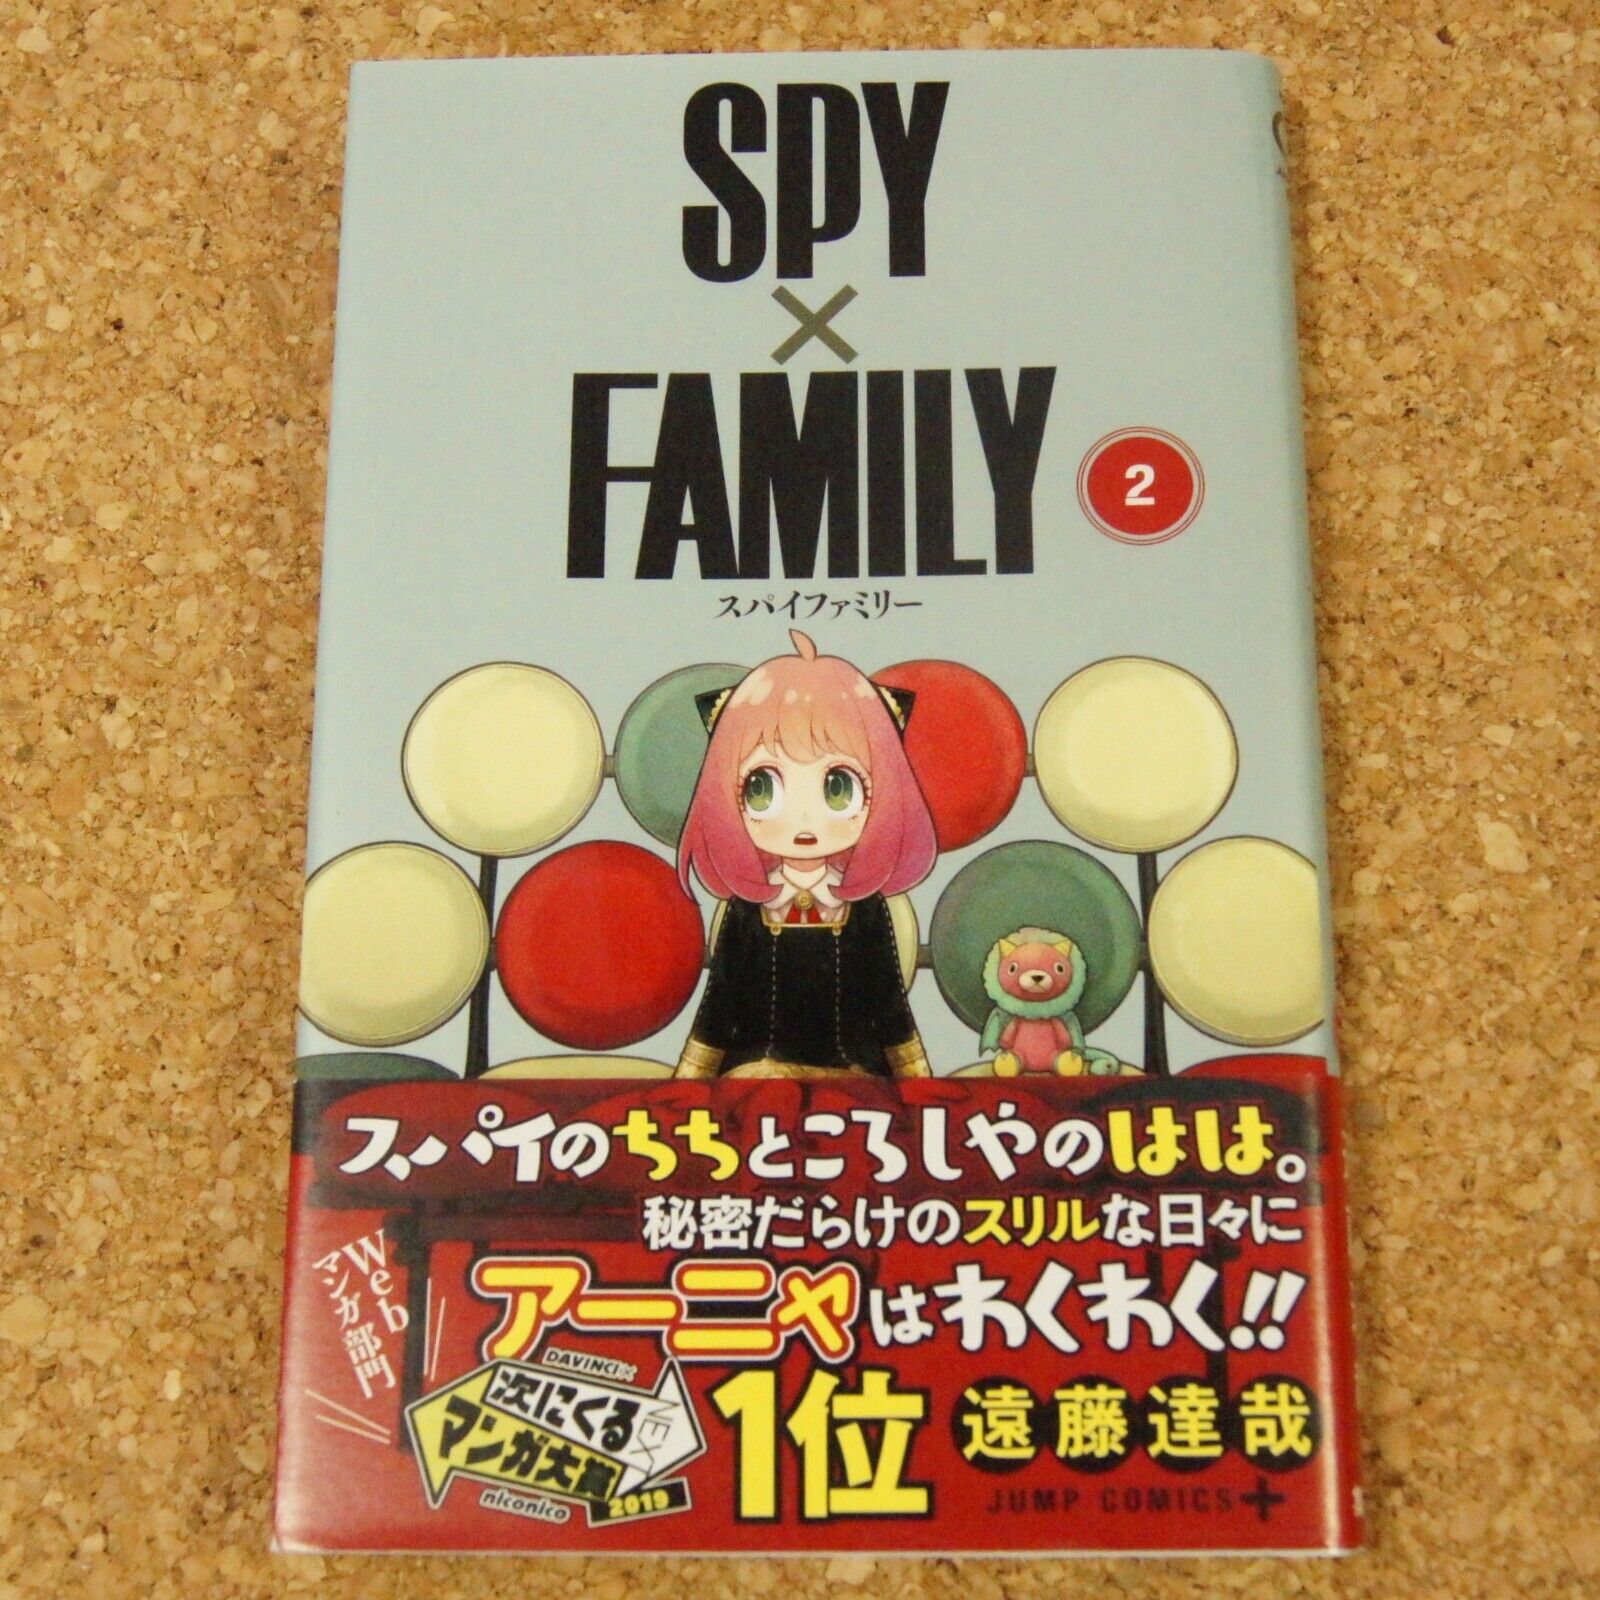 Spy×Family Vol.2 Obi 1st Print Edition Japanese Manga Jump Comics From Japan